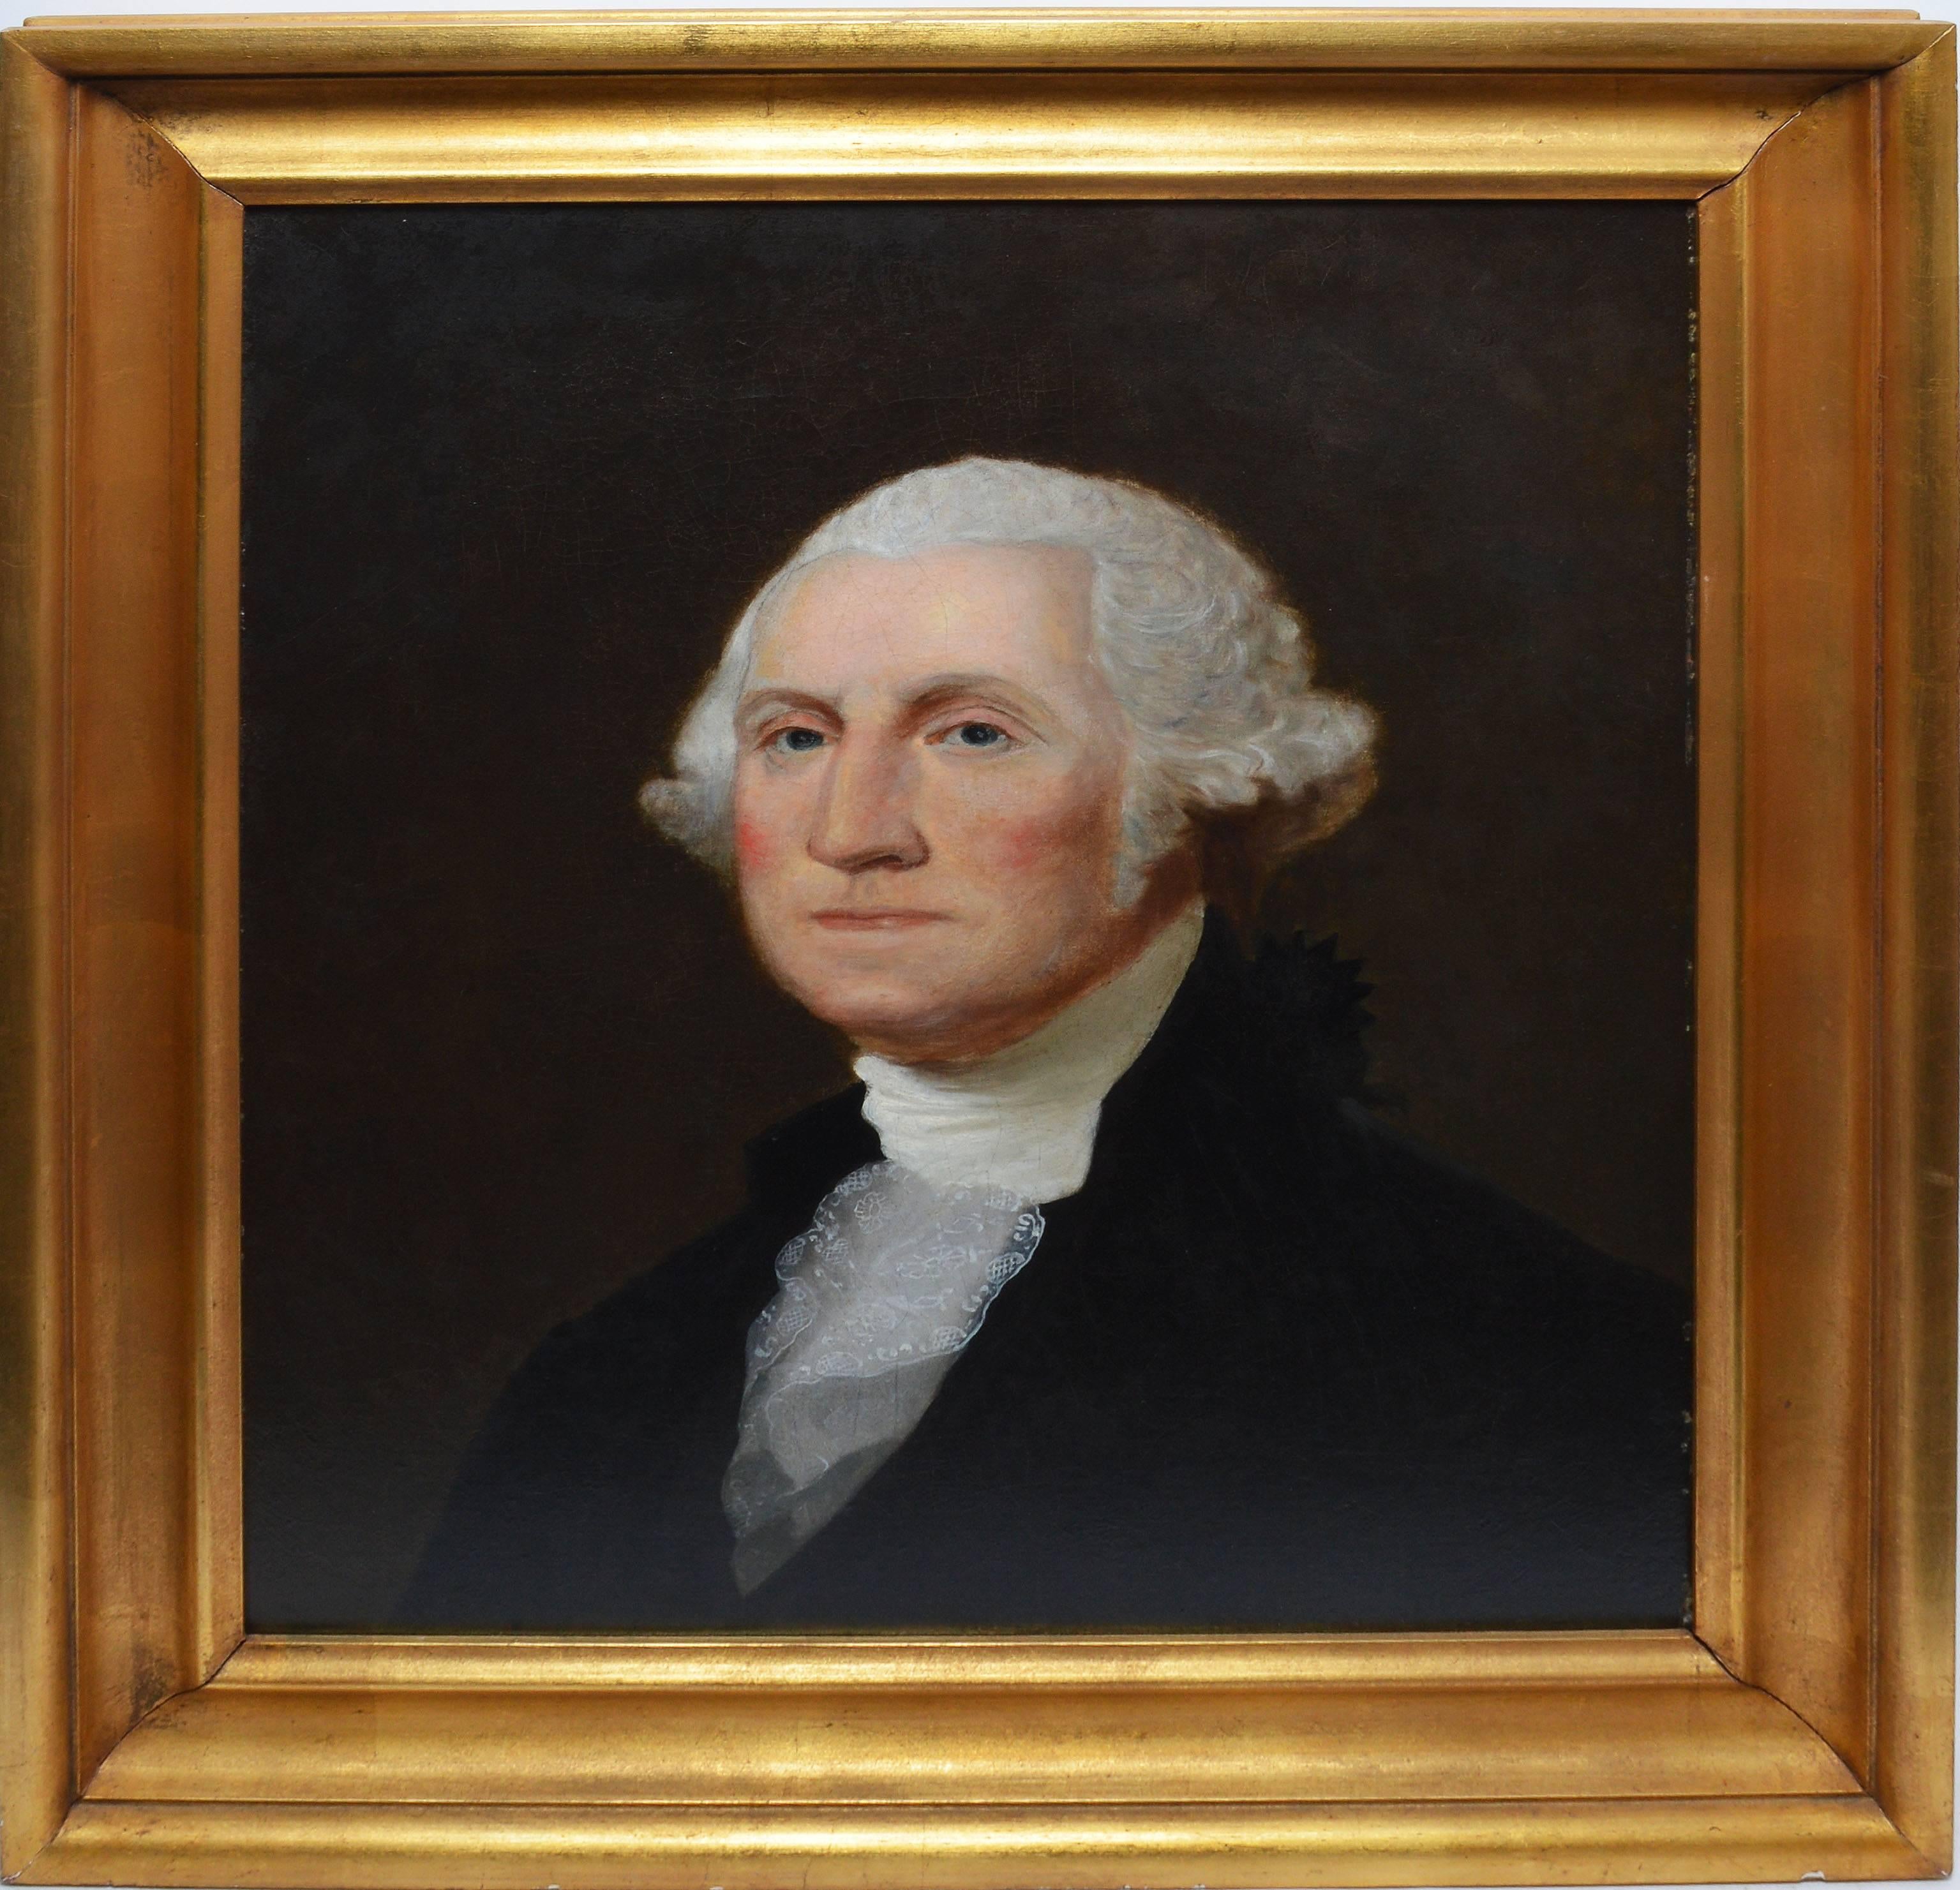 Unknown Portrait Painting - 19th Century American School Portrait of George Washington